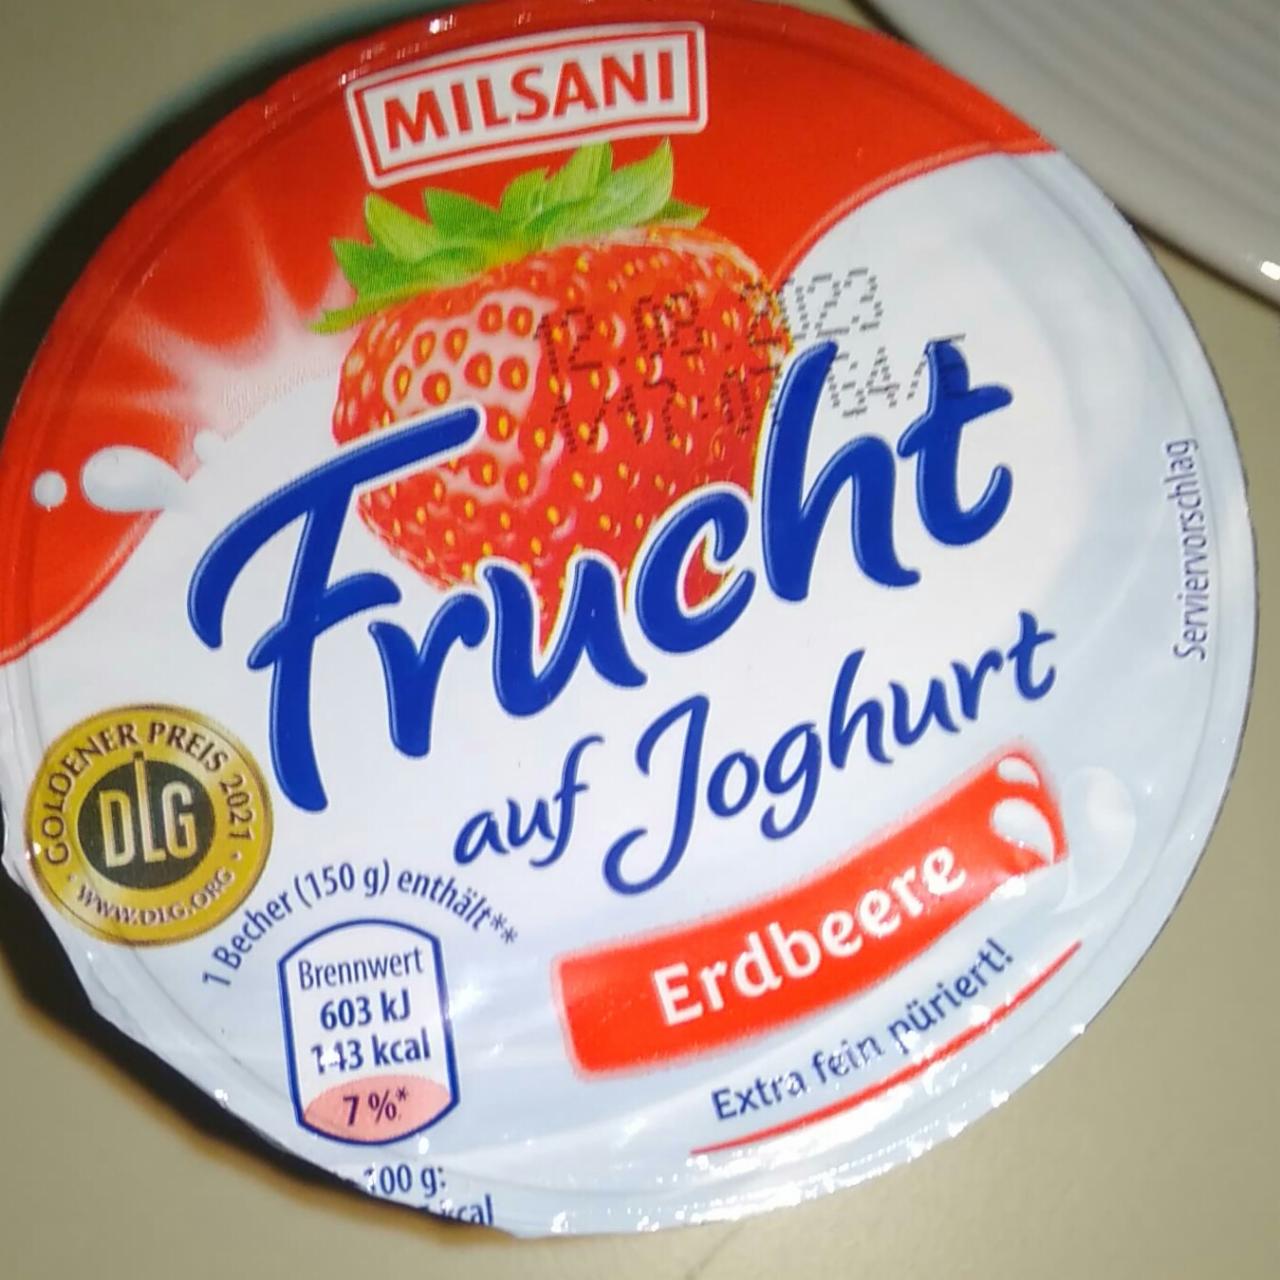 Fotografie - Frucht auf Joghurt Erdbeer Milsani